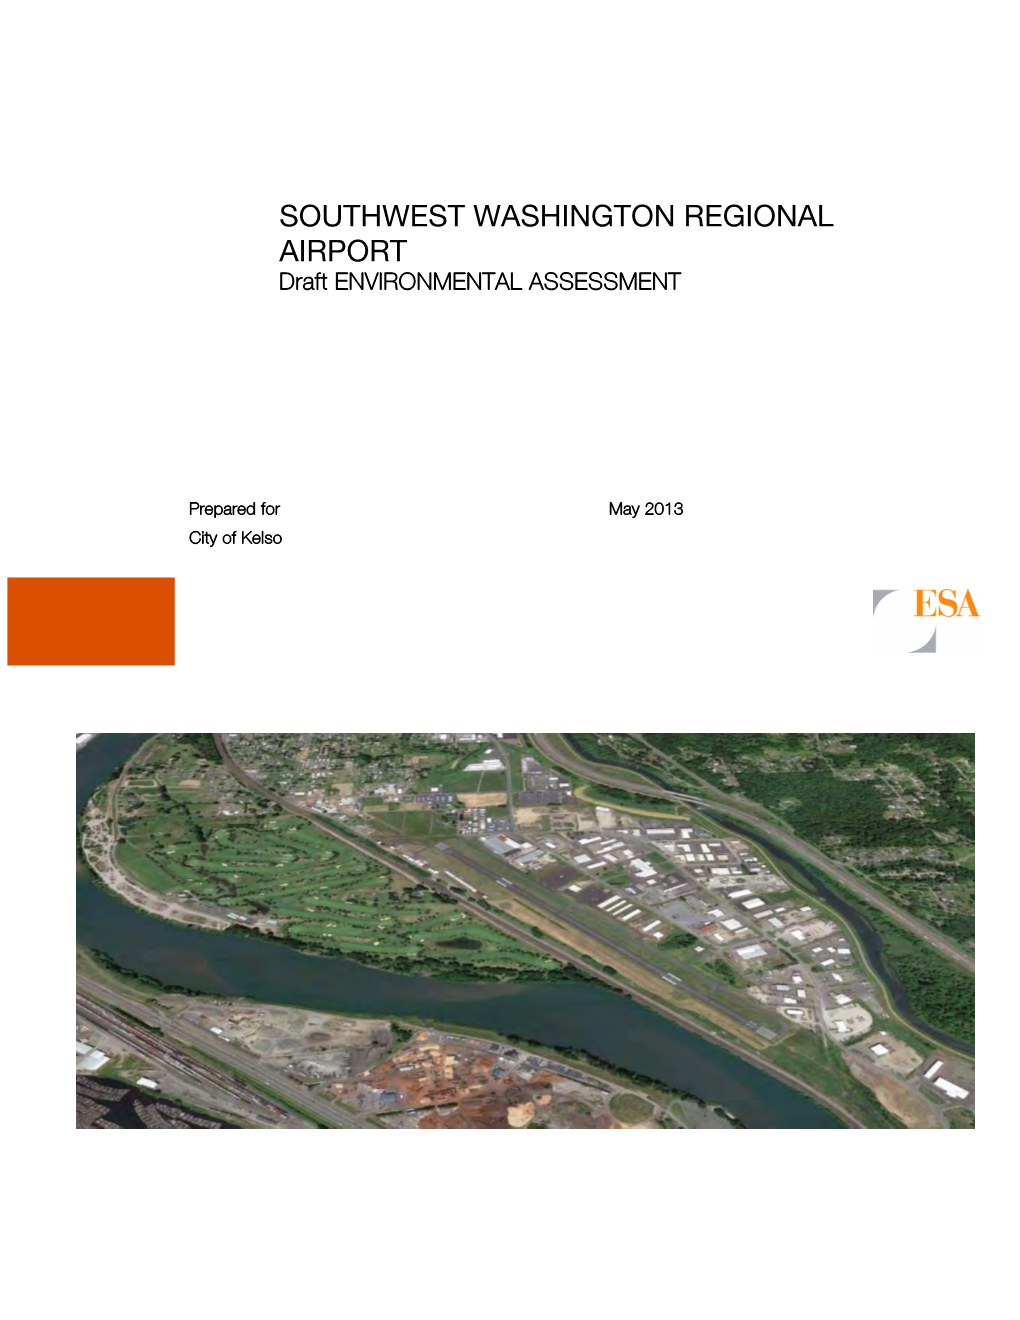 SOUTHWEST WASHINGTON REGIONAL AIRPORT Draft ENVIRONMENTAL ASSESSMENT